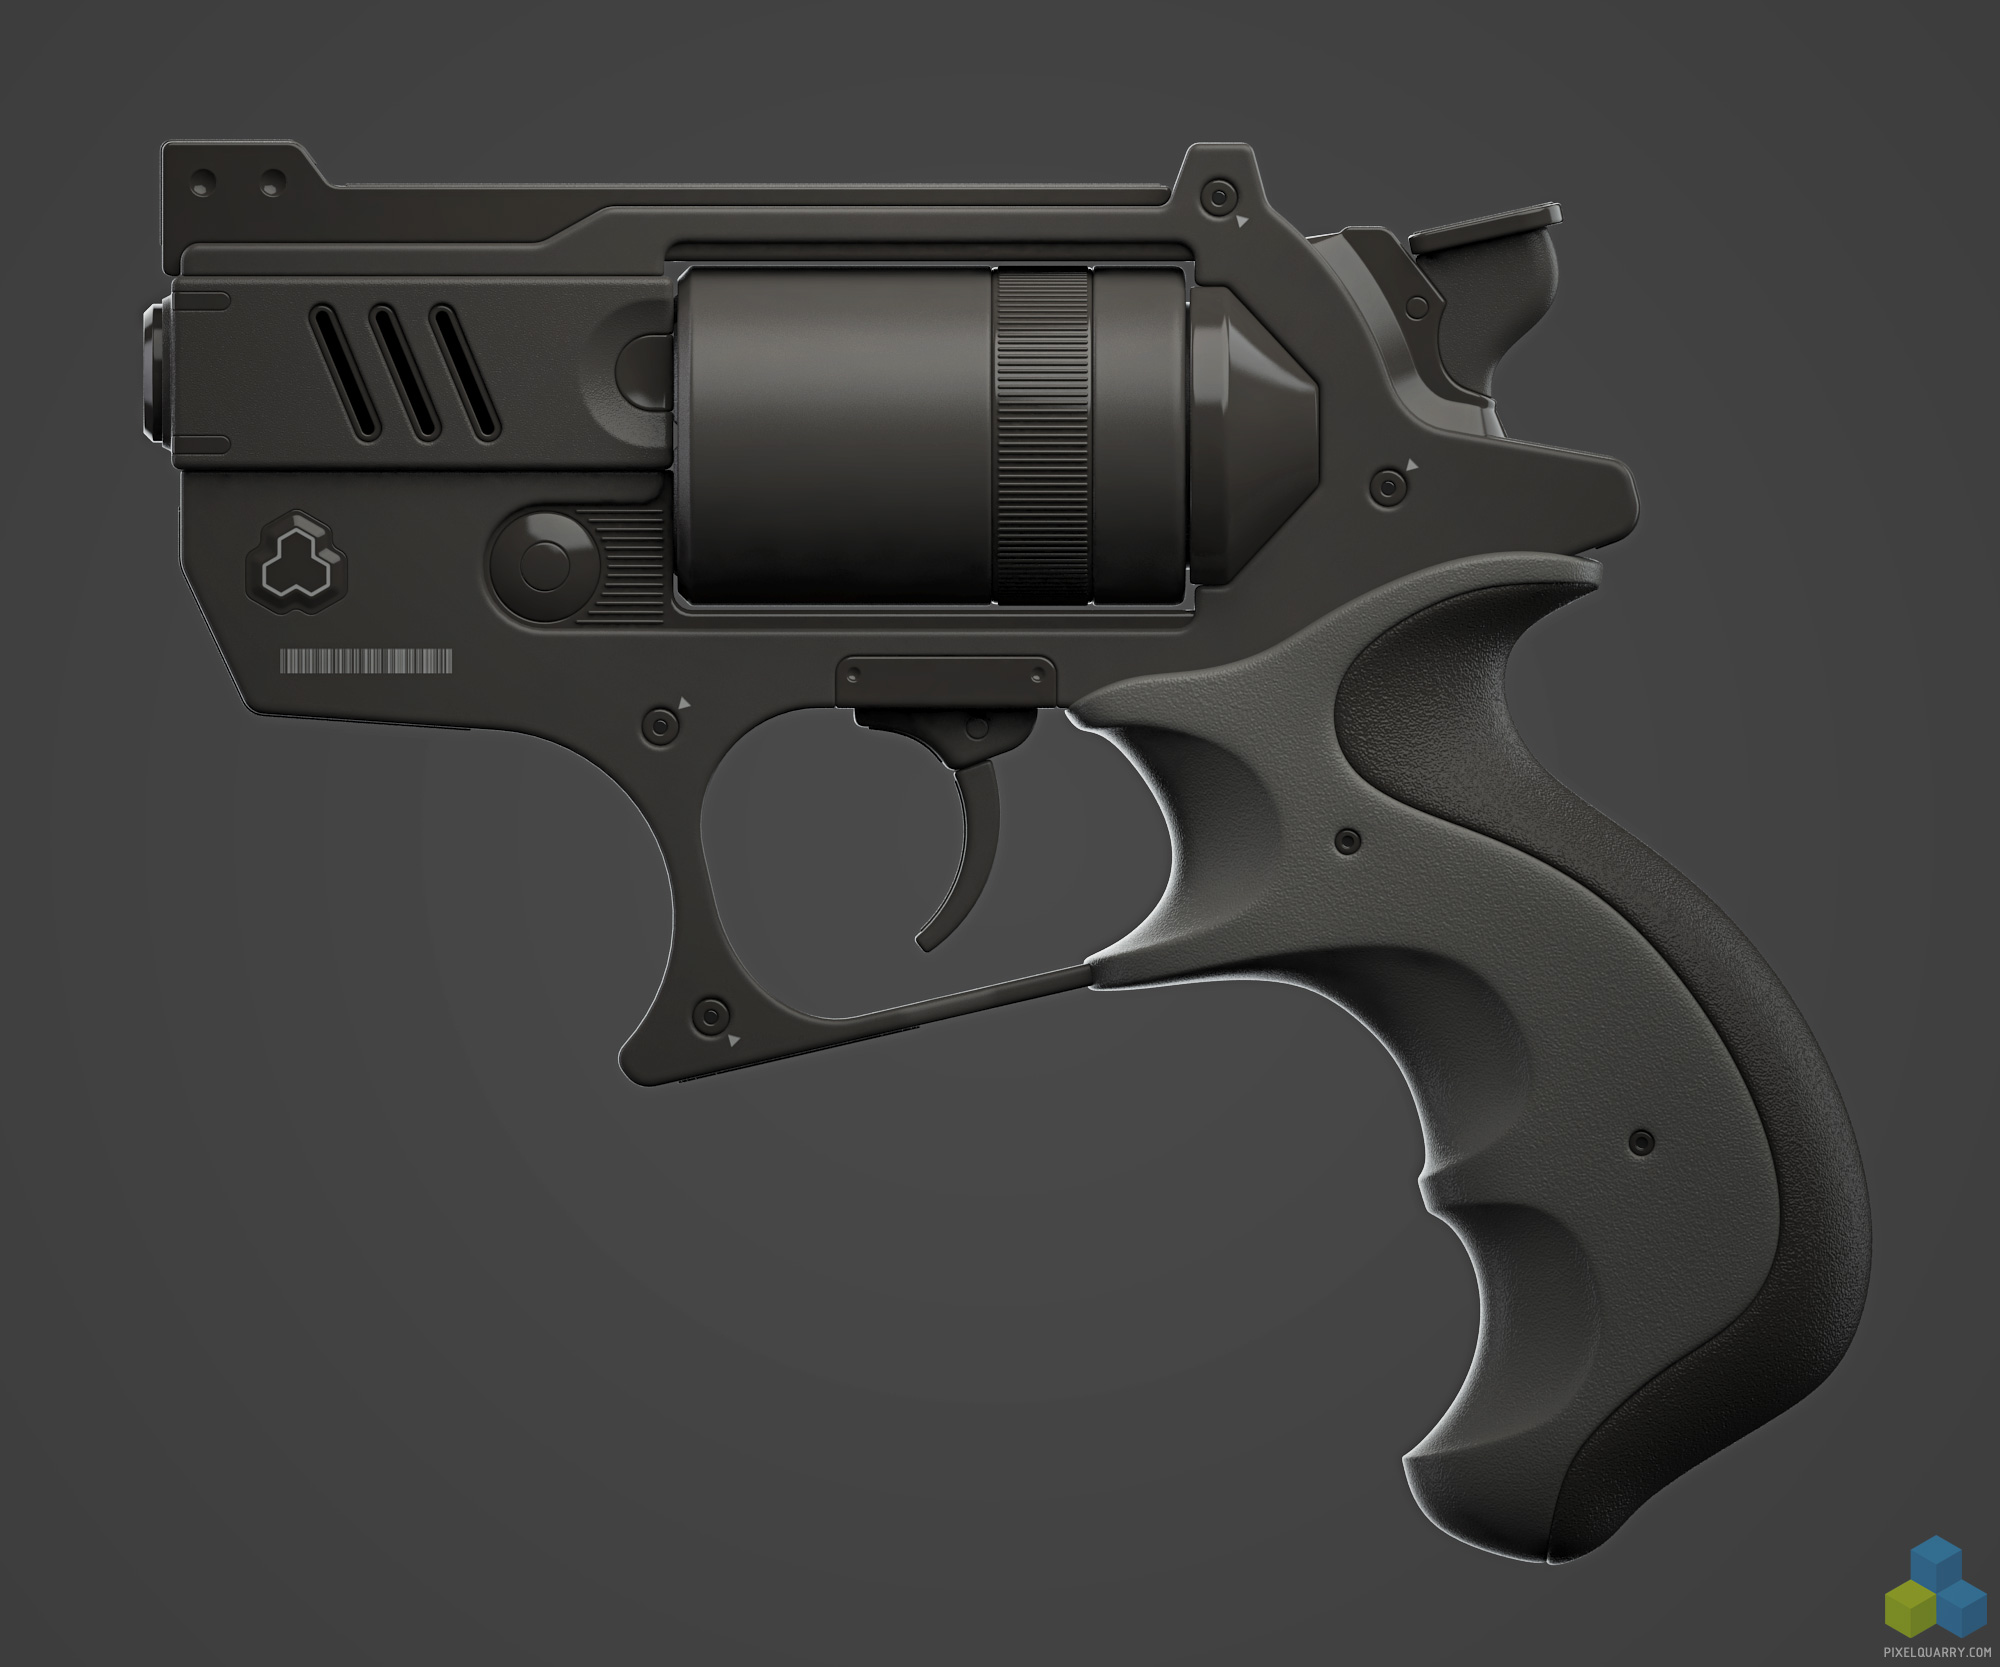 SciFi Snubnose Revolver - Shot3 by pixelquarry on DeviantArt